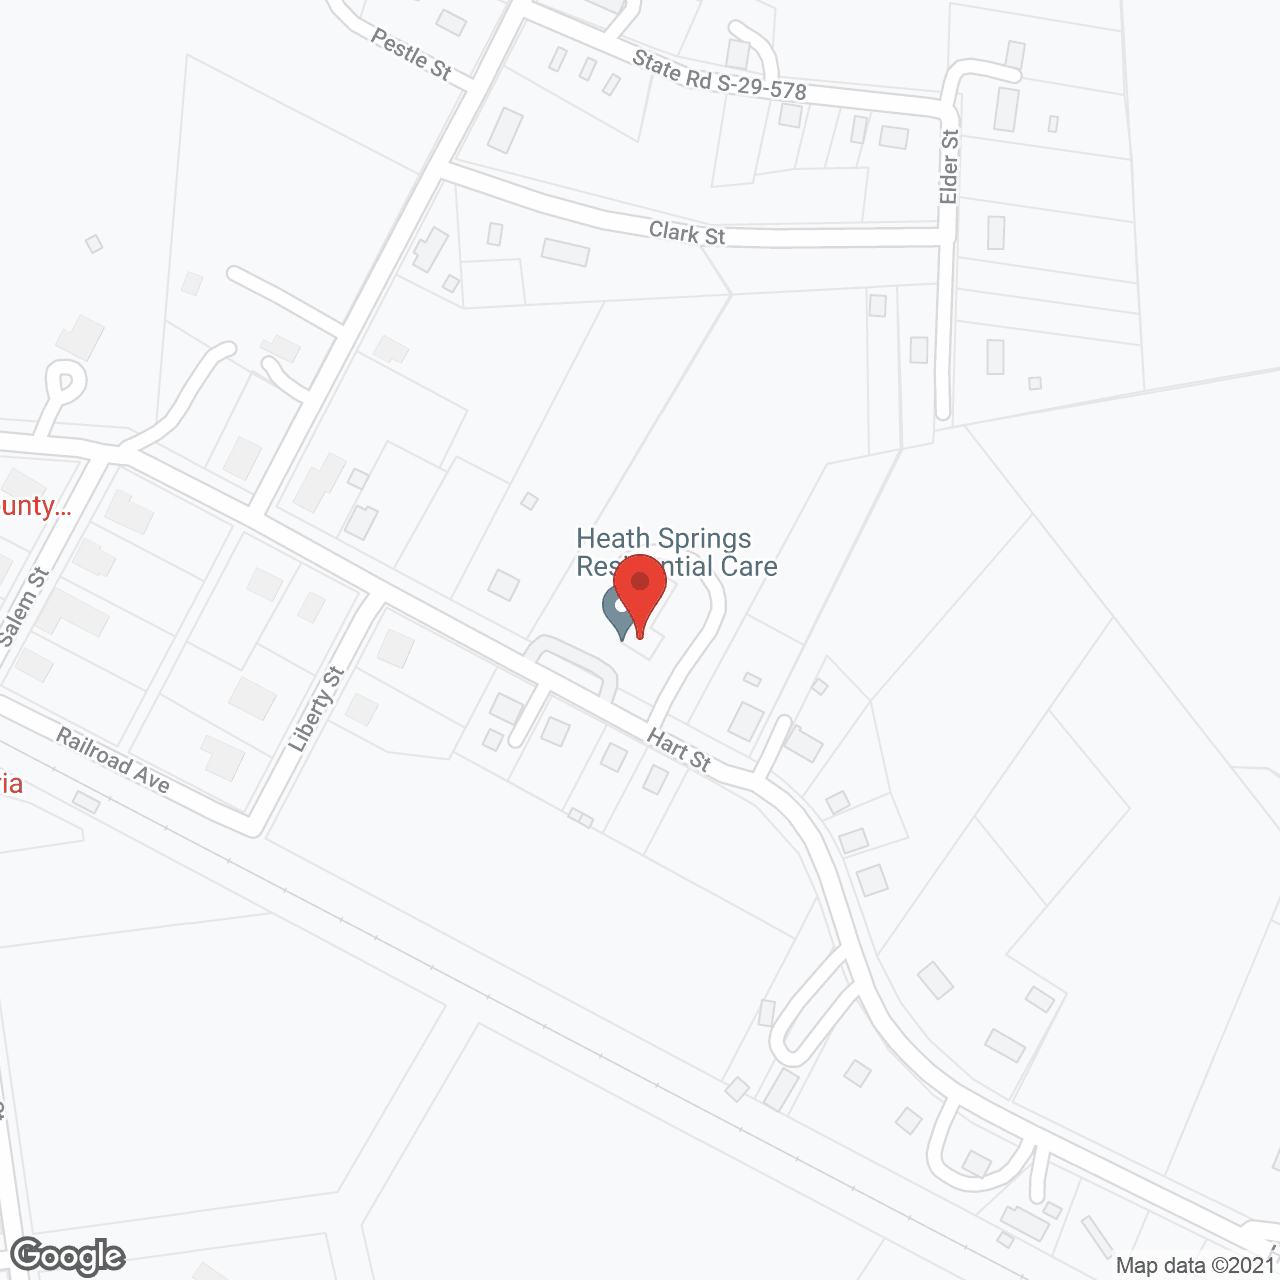 Heath Springs Residential Care in google map